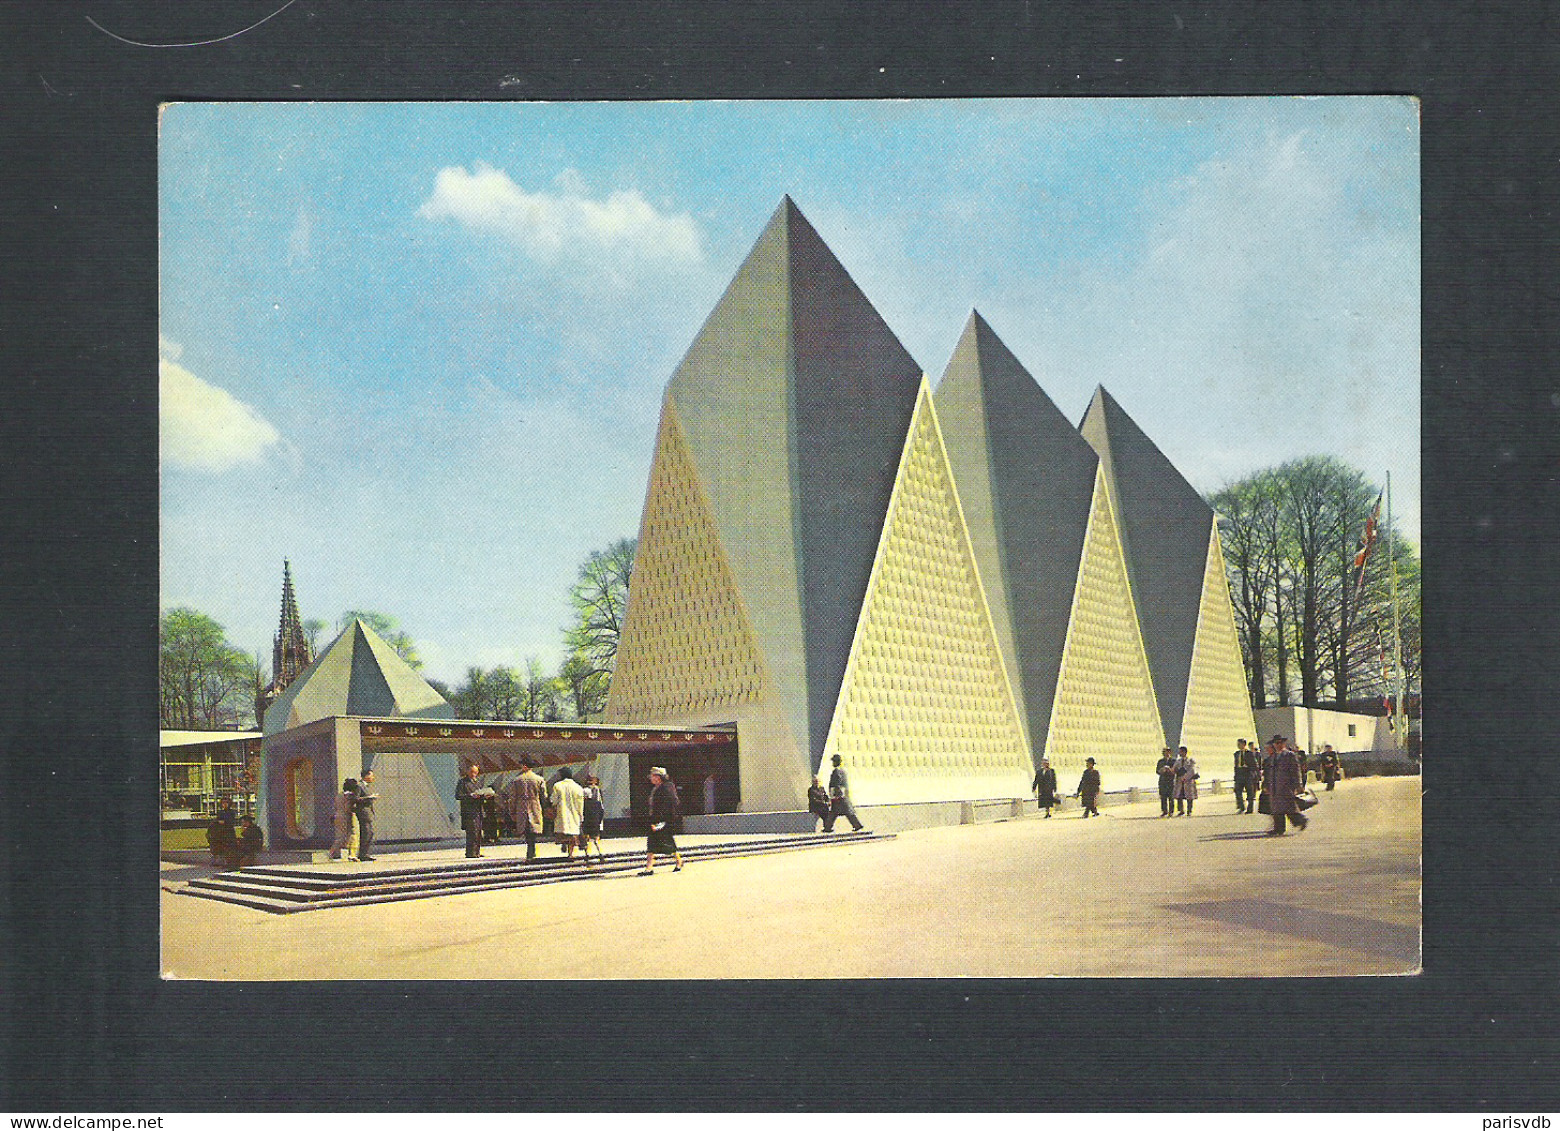 BRUSSEL - EXPO '58 - PAVILJOEN  VAN  GROOT-BRITTANIE  (12.260) - Expositions Universelles